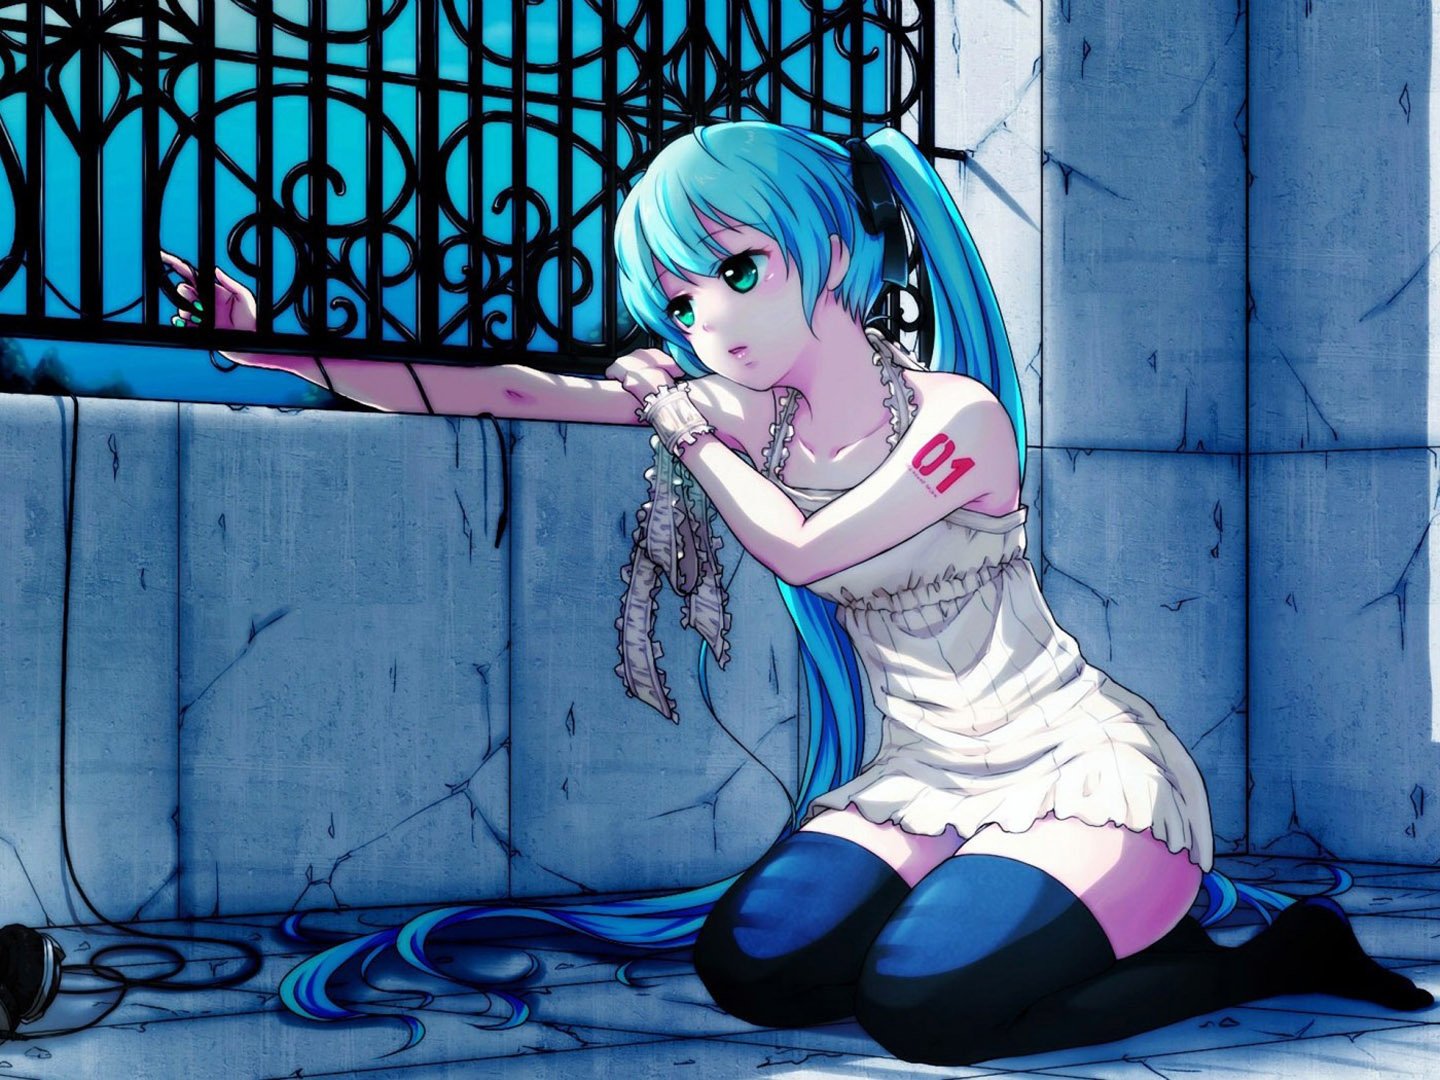 Sad girl anime wallpaper comics desktop background cartoon ...